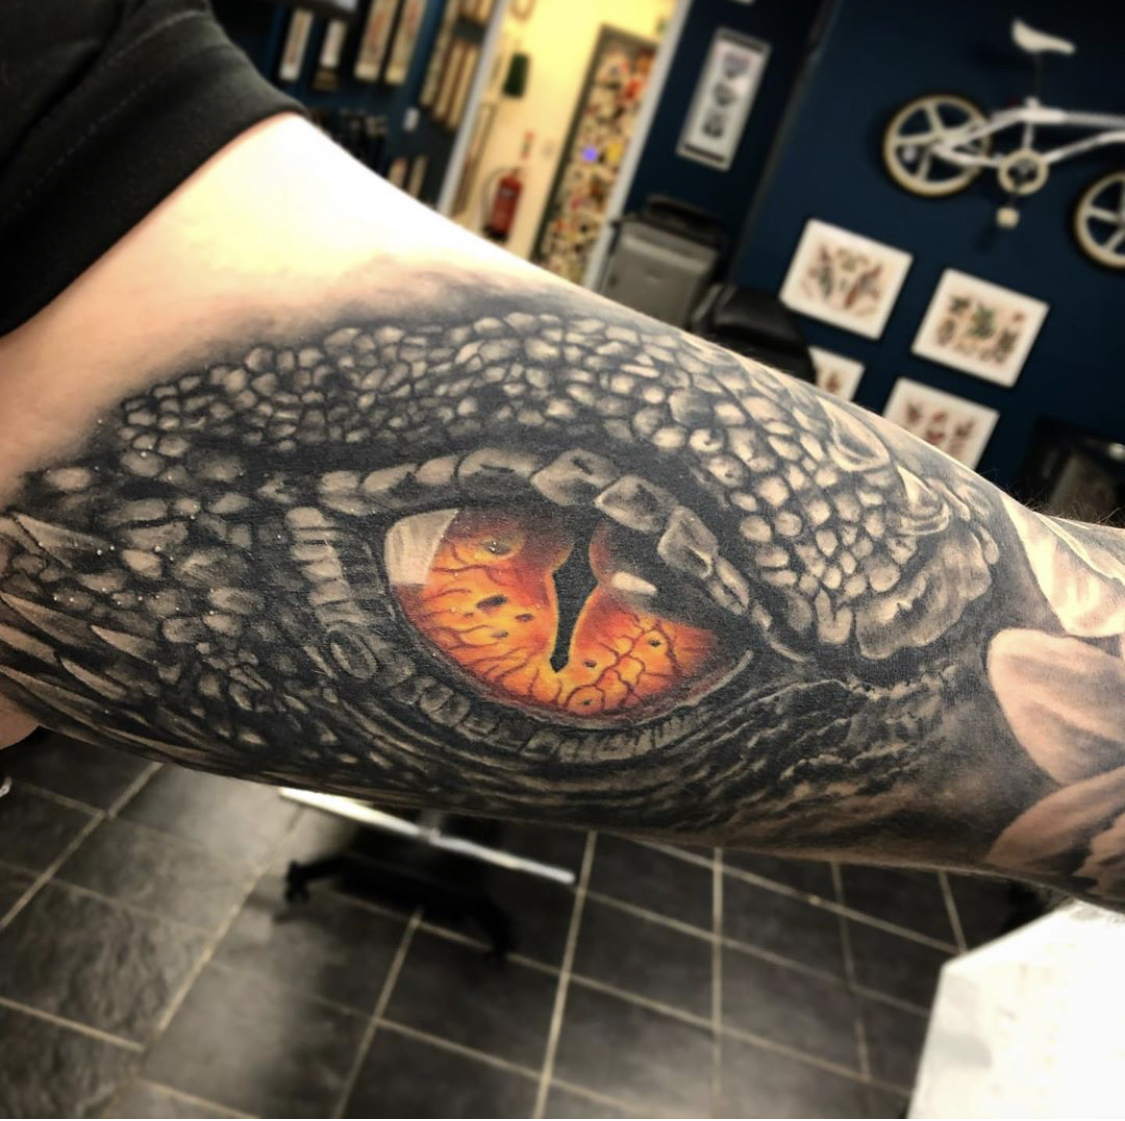 Hands in the Reptile Eye  Reptile eye Eye tattoo Tattoos